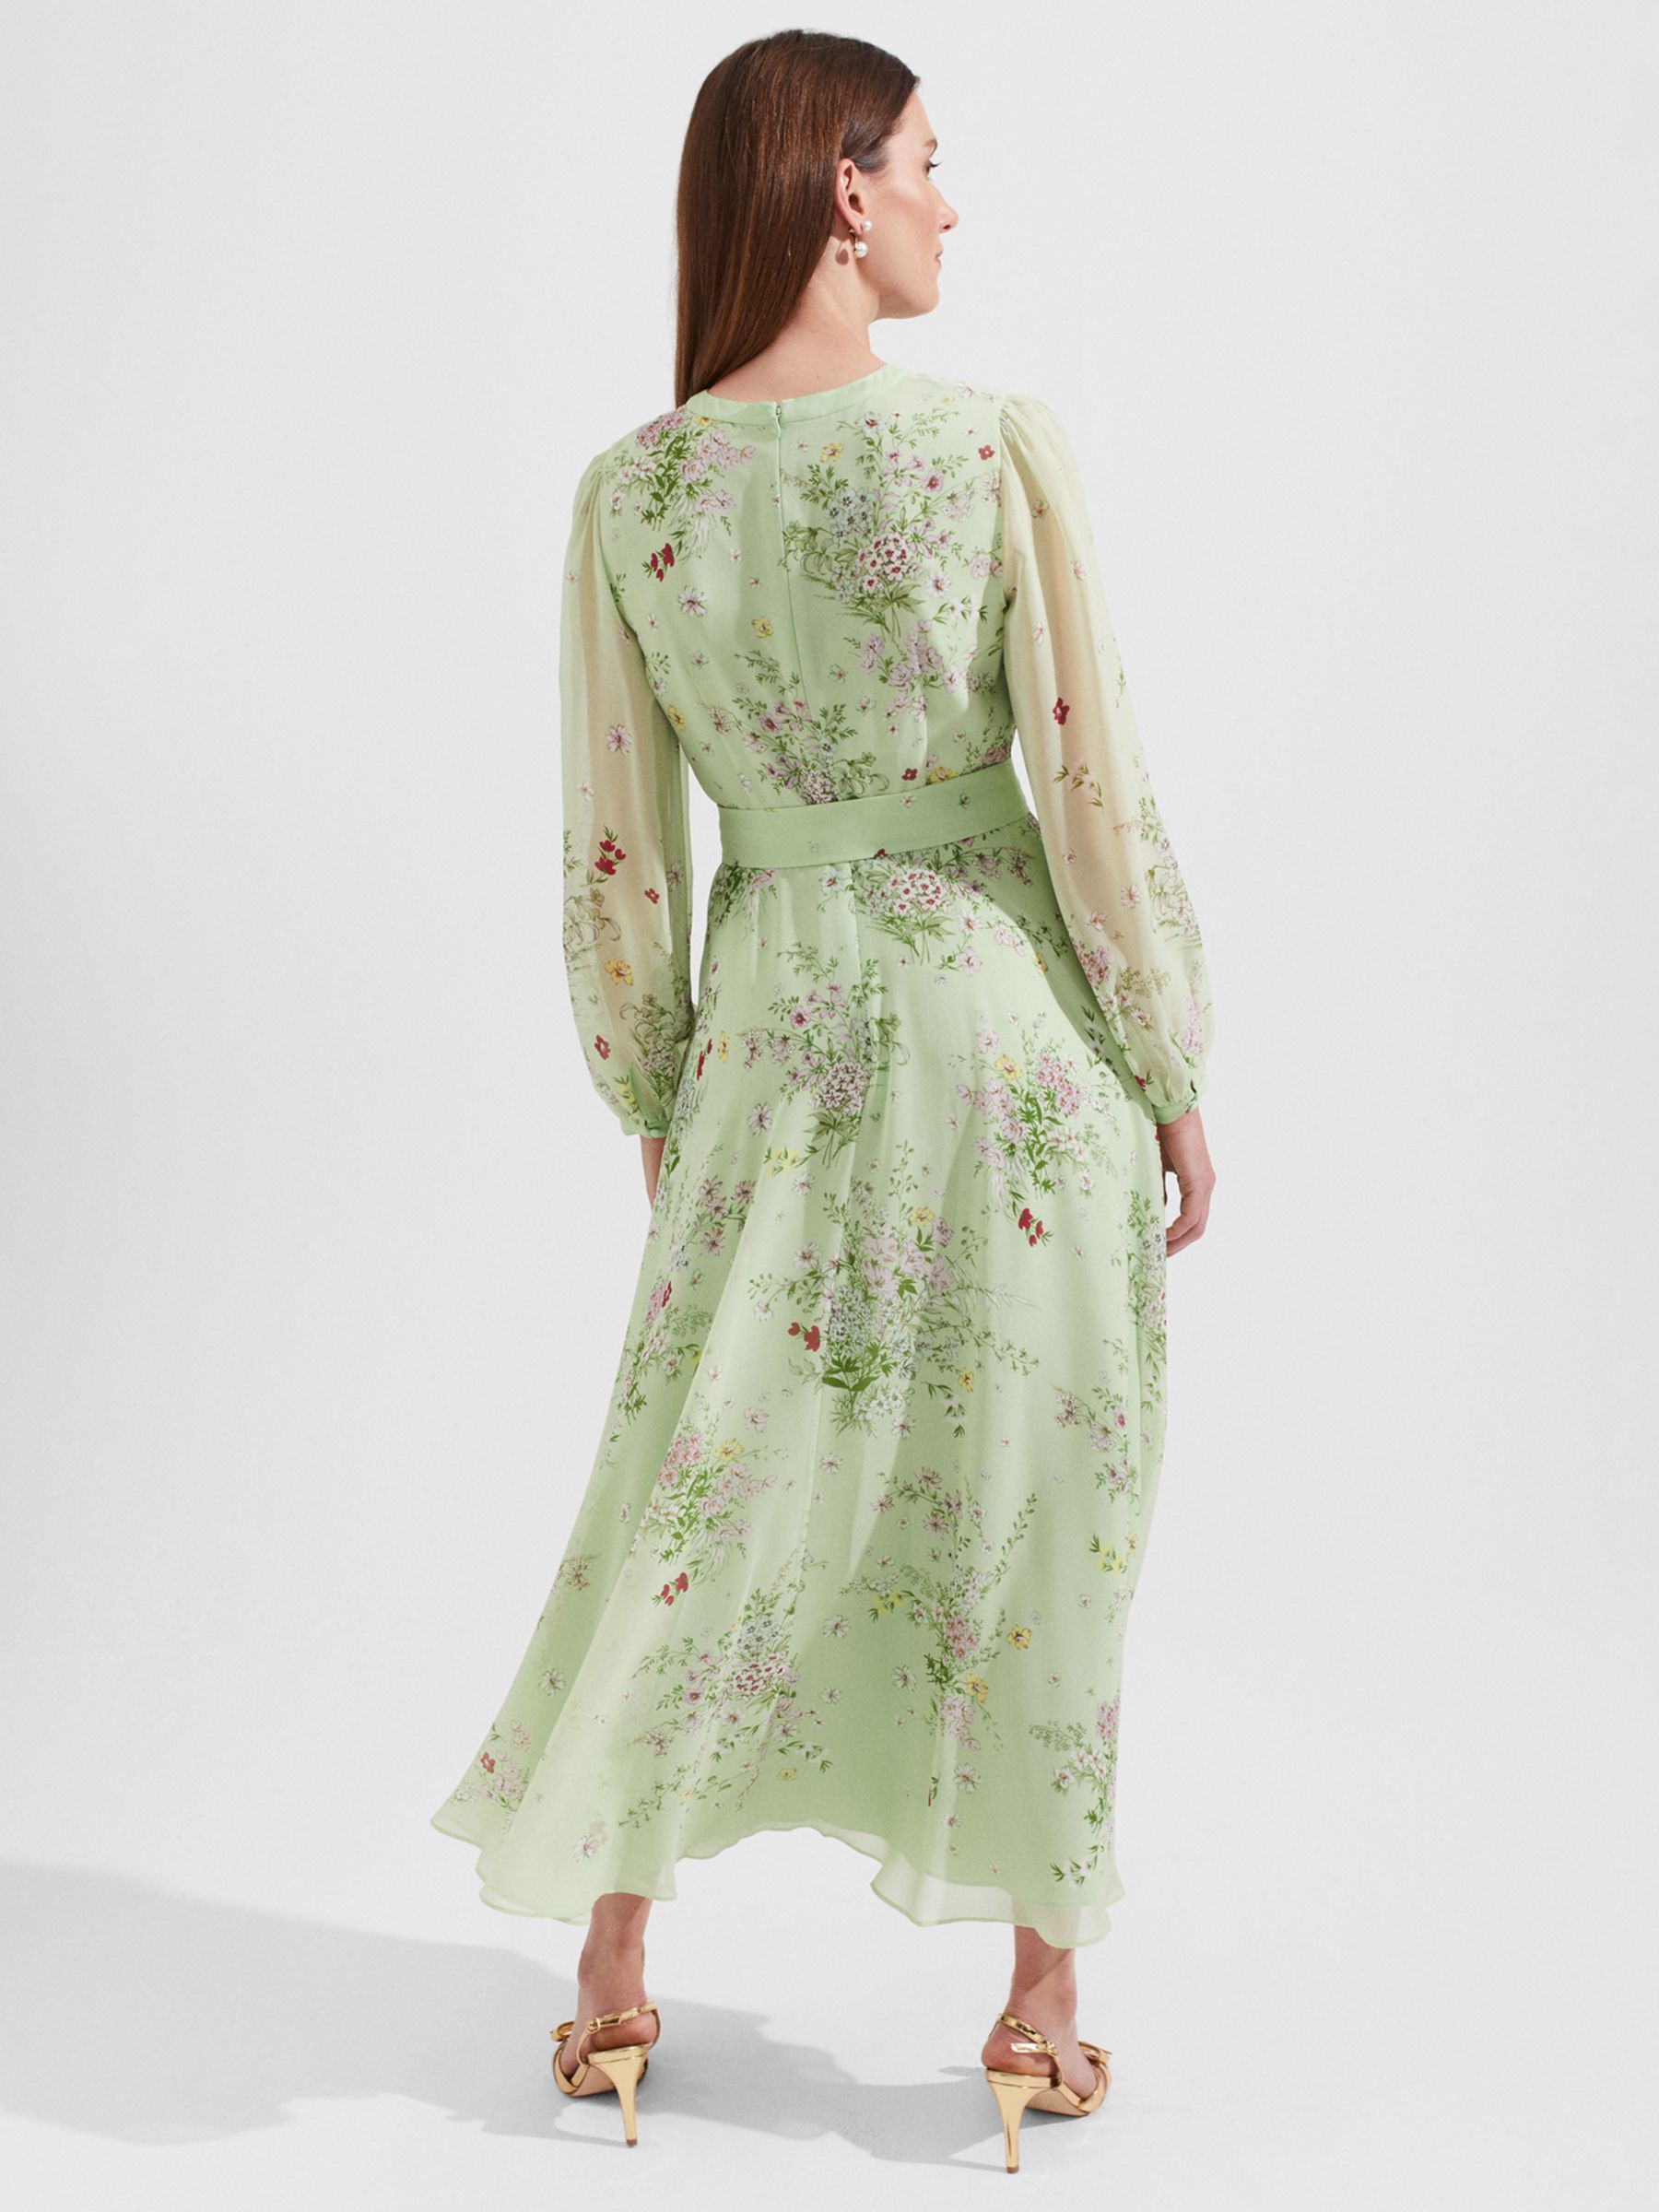 Hobbs Leia Silk Floral Print Dress at John Lewis & Partners